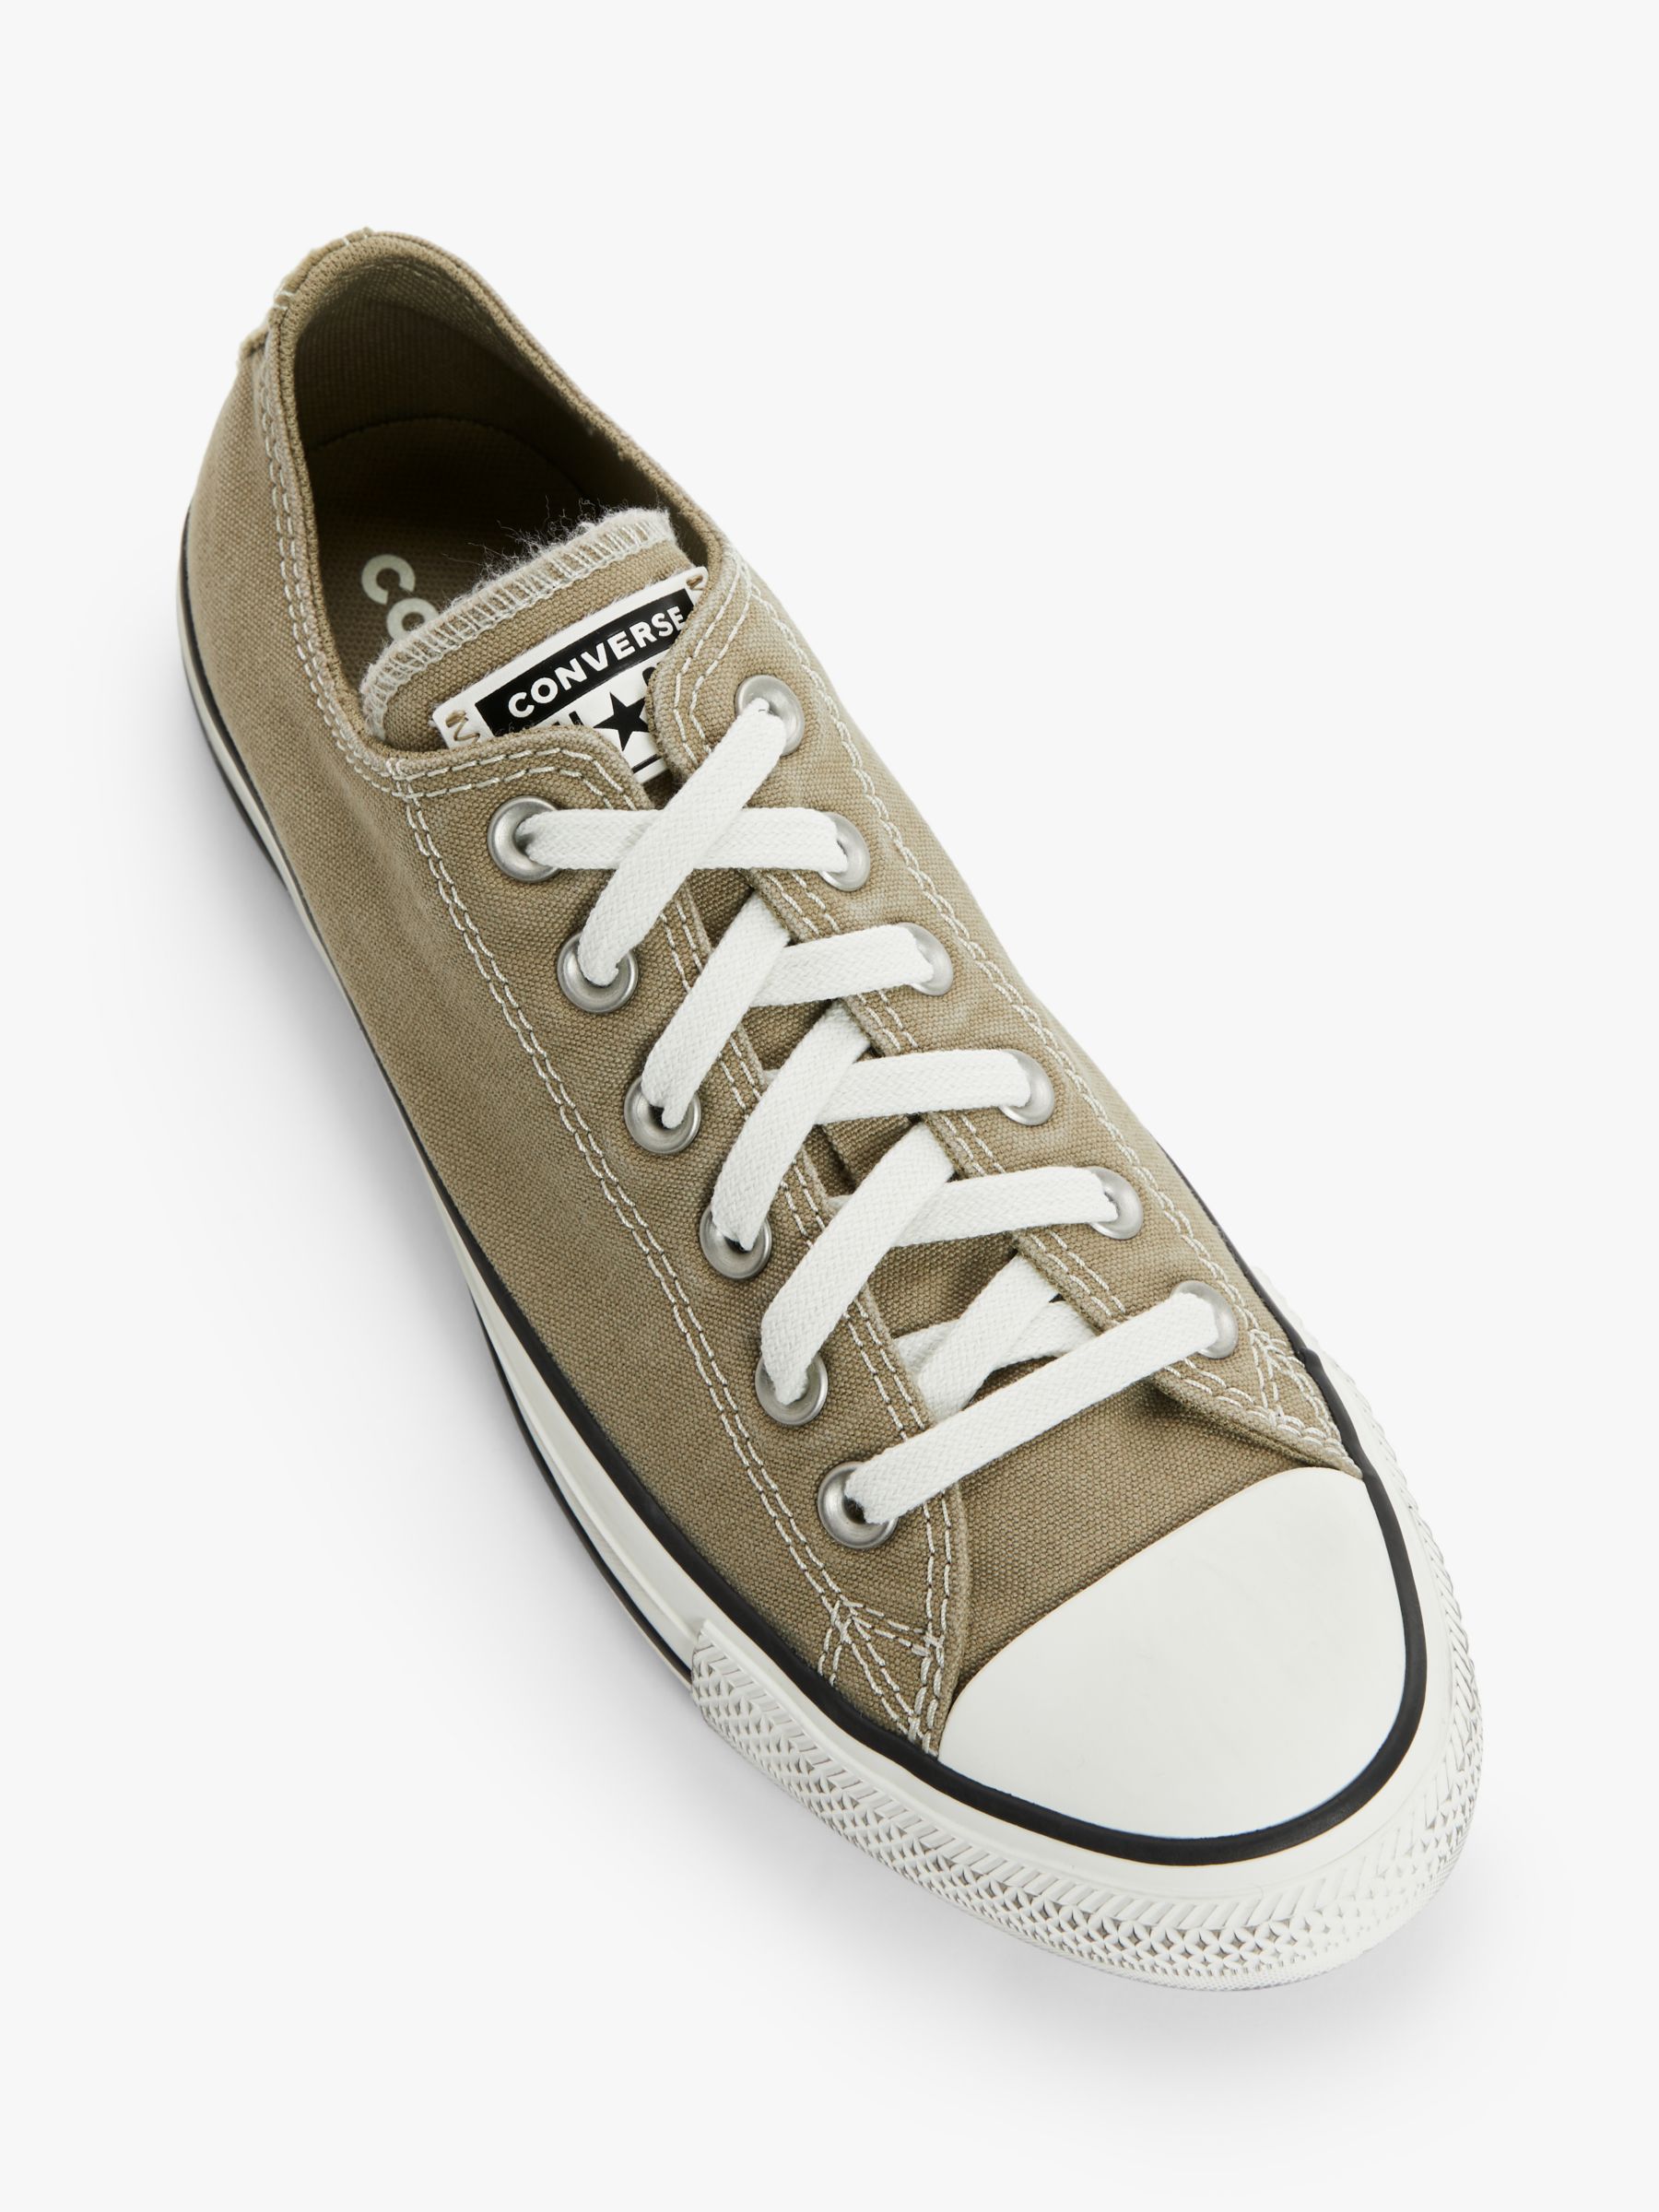 buy converse shoes